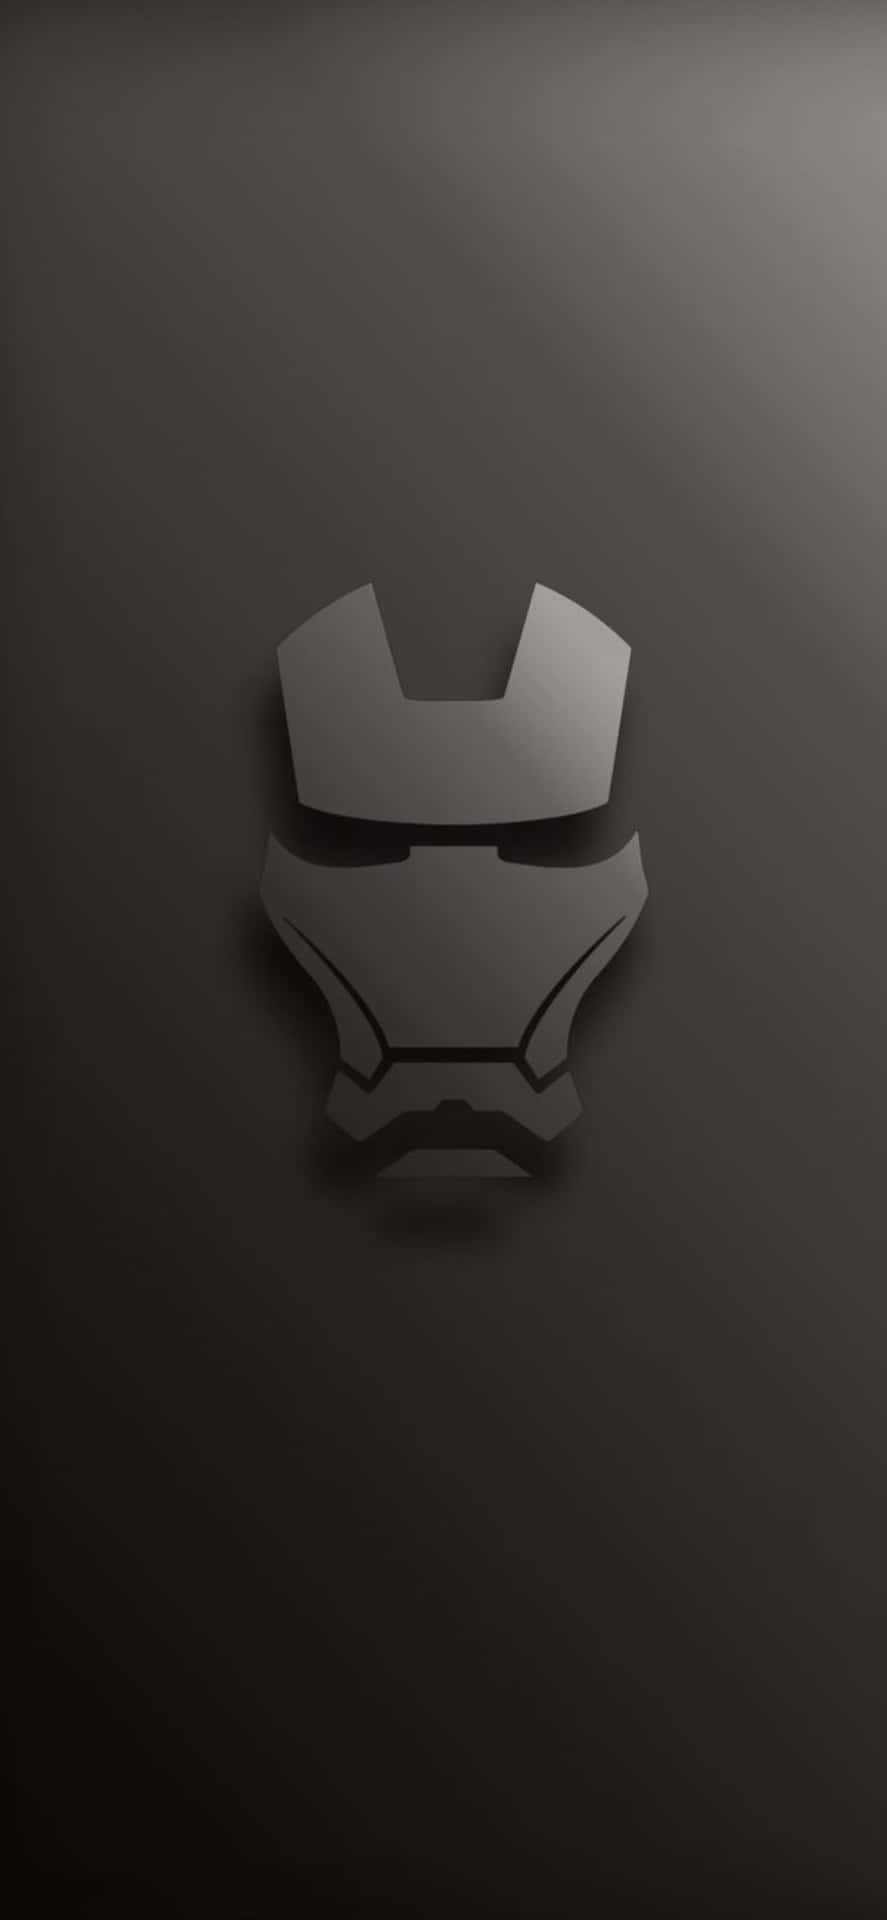 Cool Iron Man Logo iPhone Wallpaper